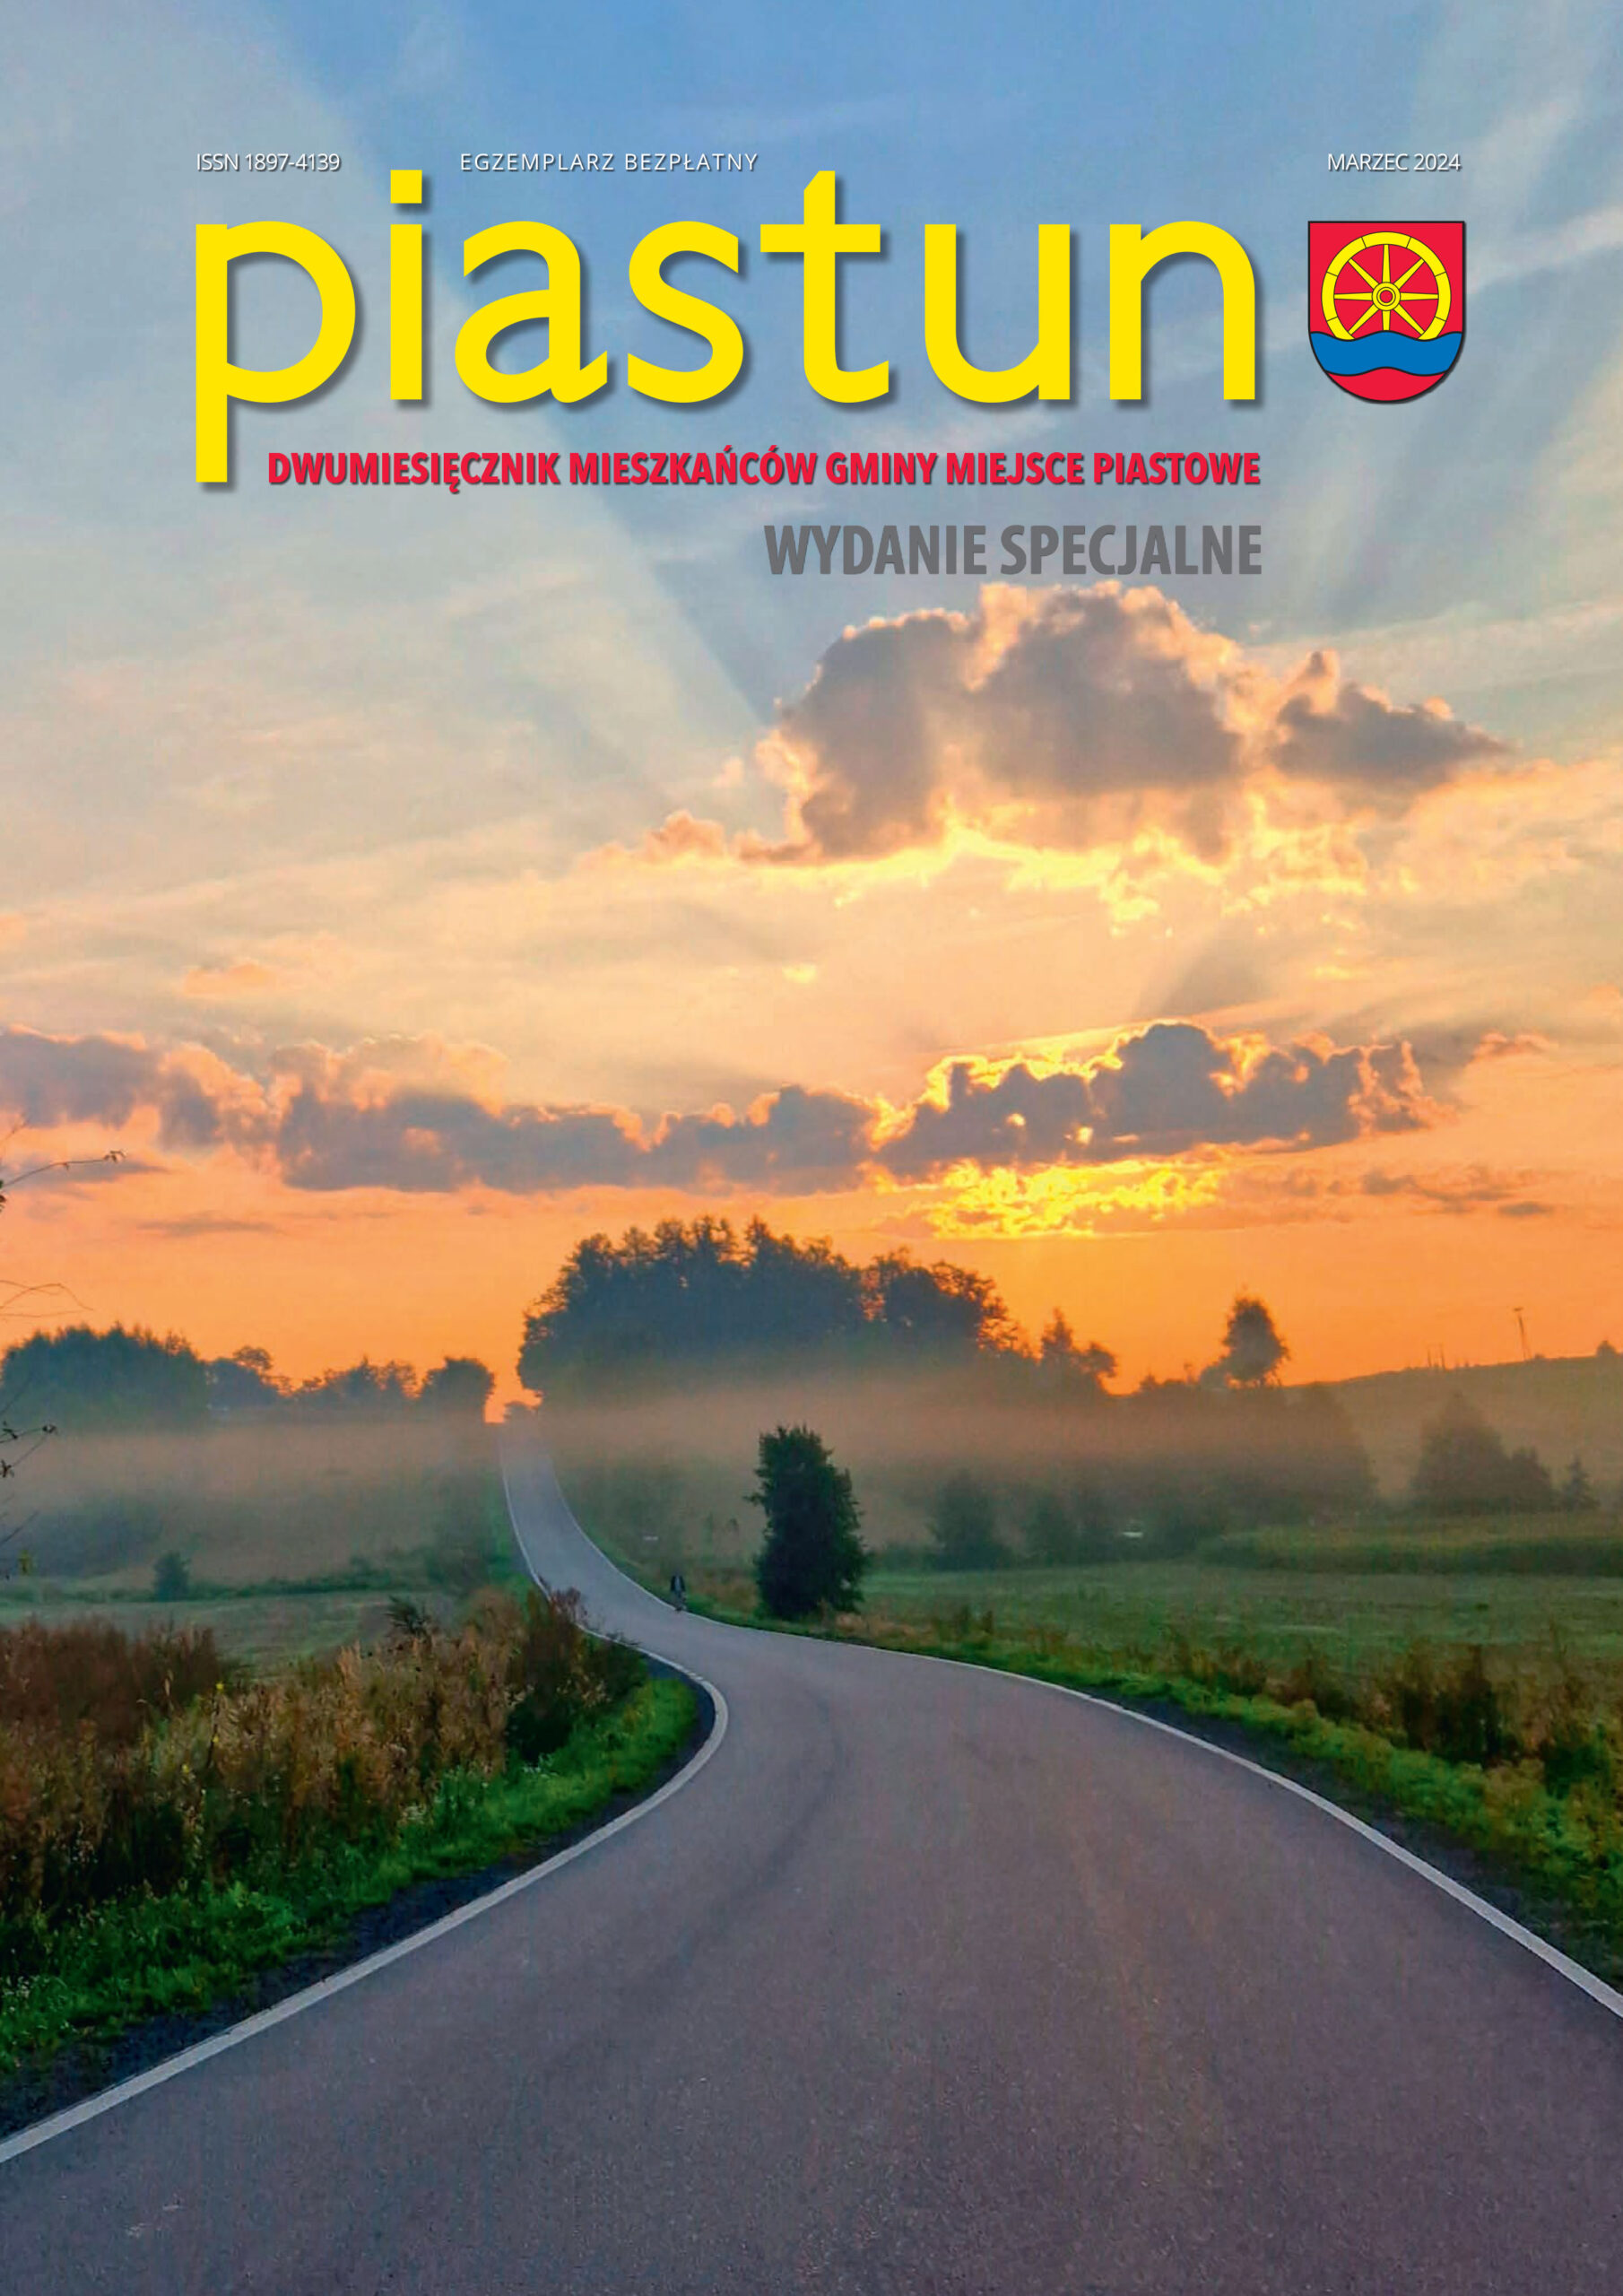 Read more about the article Wydanie specjalne Piastuna